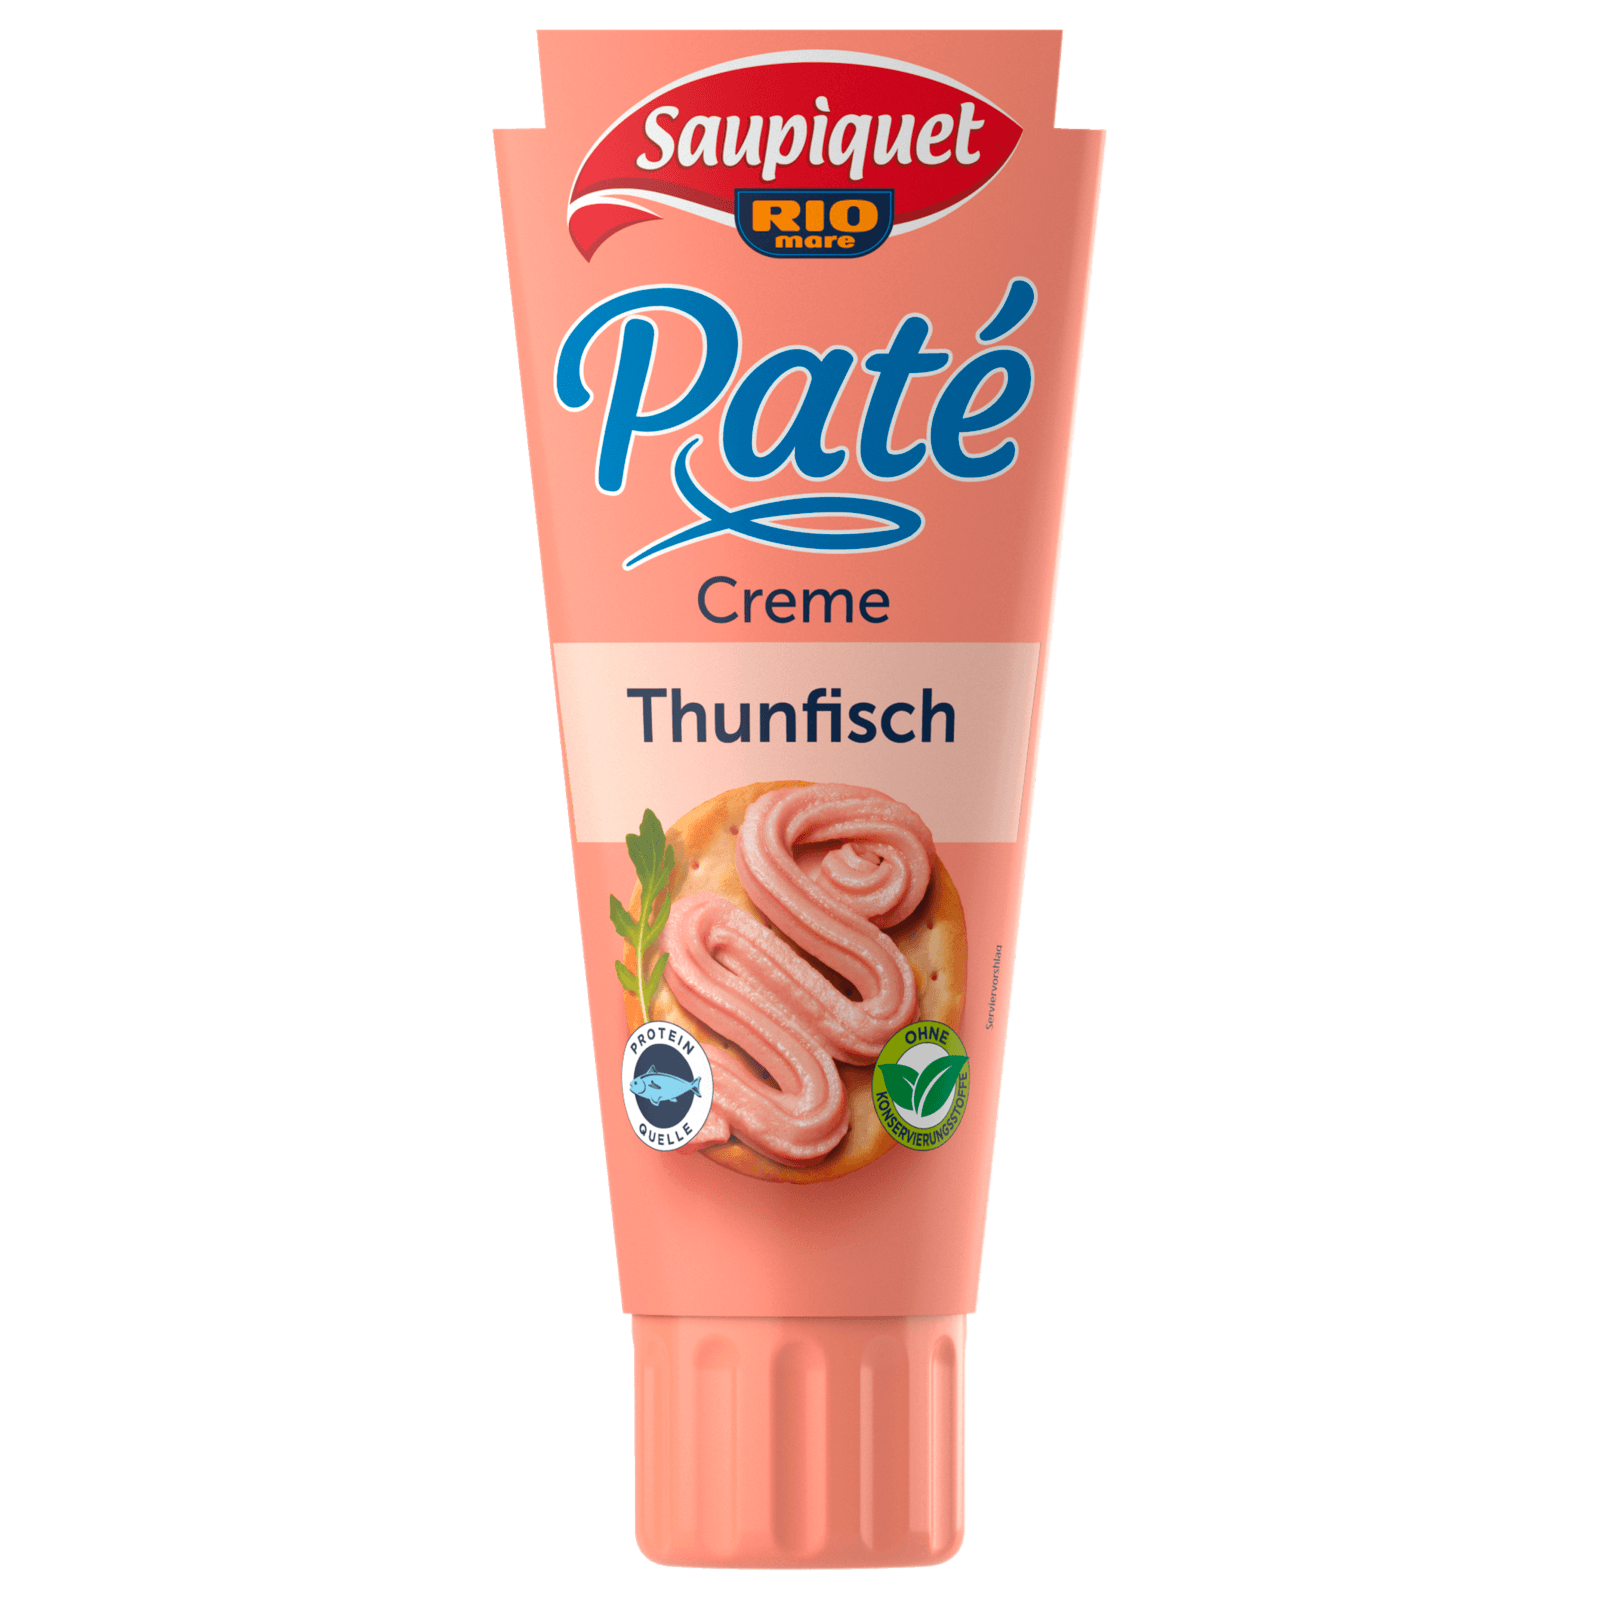 Saupiquet Paté Creme Thunfisch 100g bei REWE online bestellen!